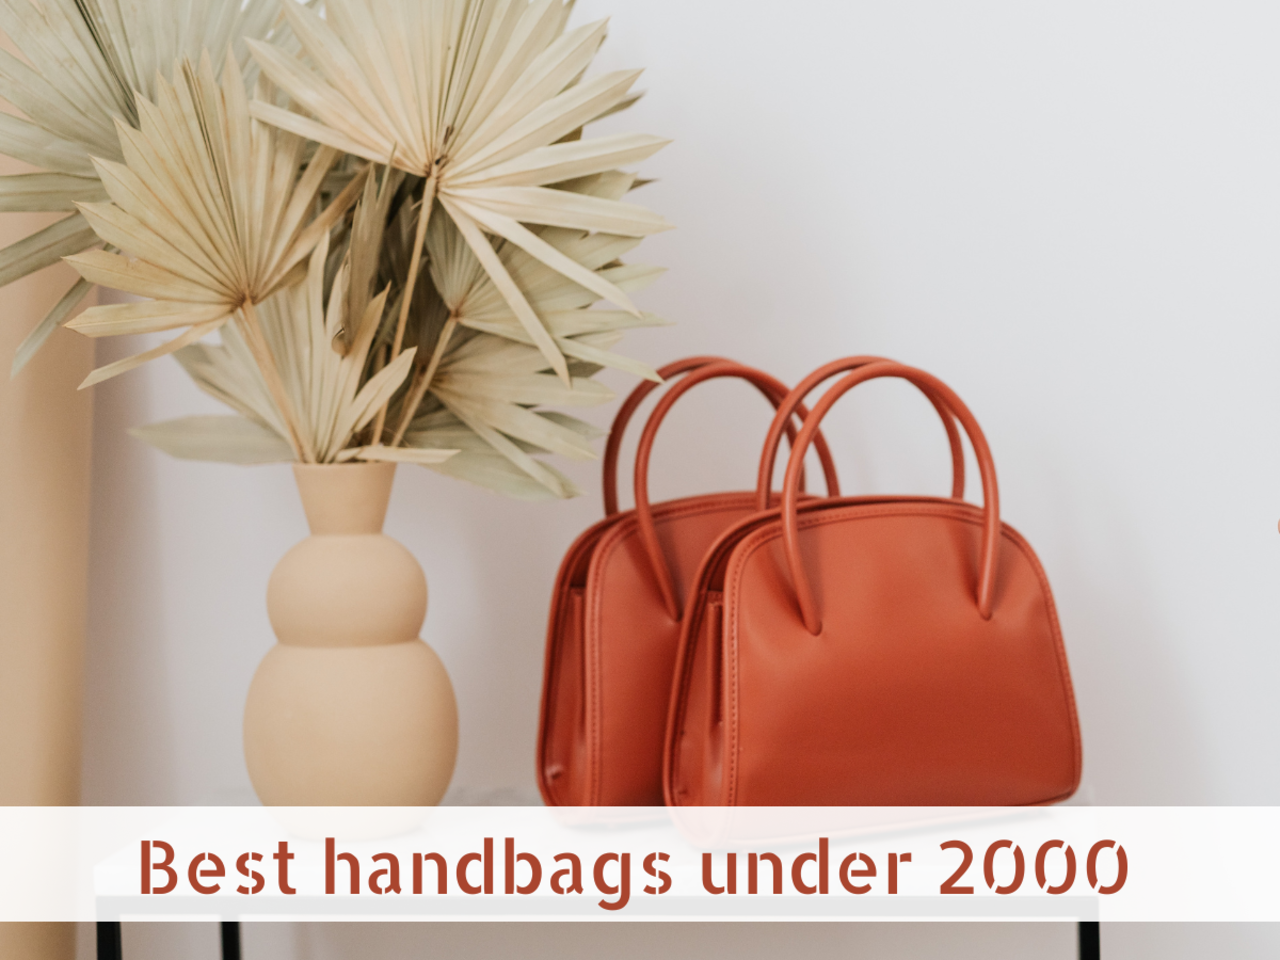 Lavie: Handbags Of The Moment, Grazia Most Loved Brand